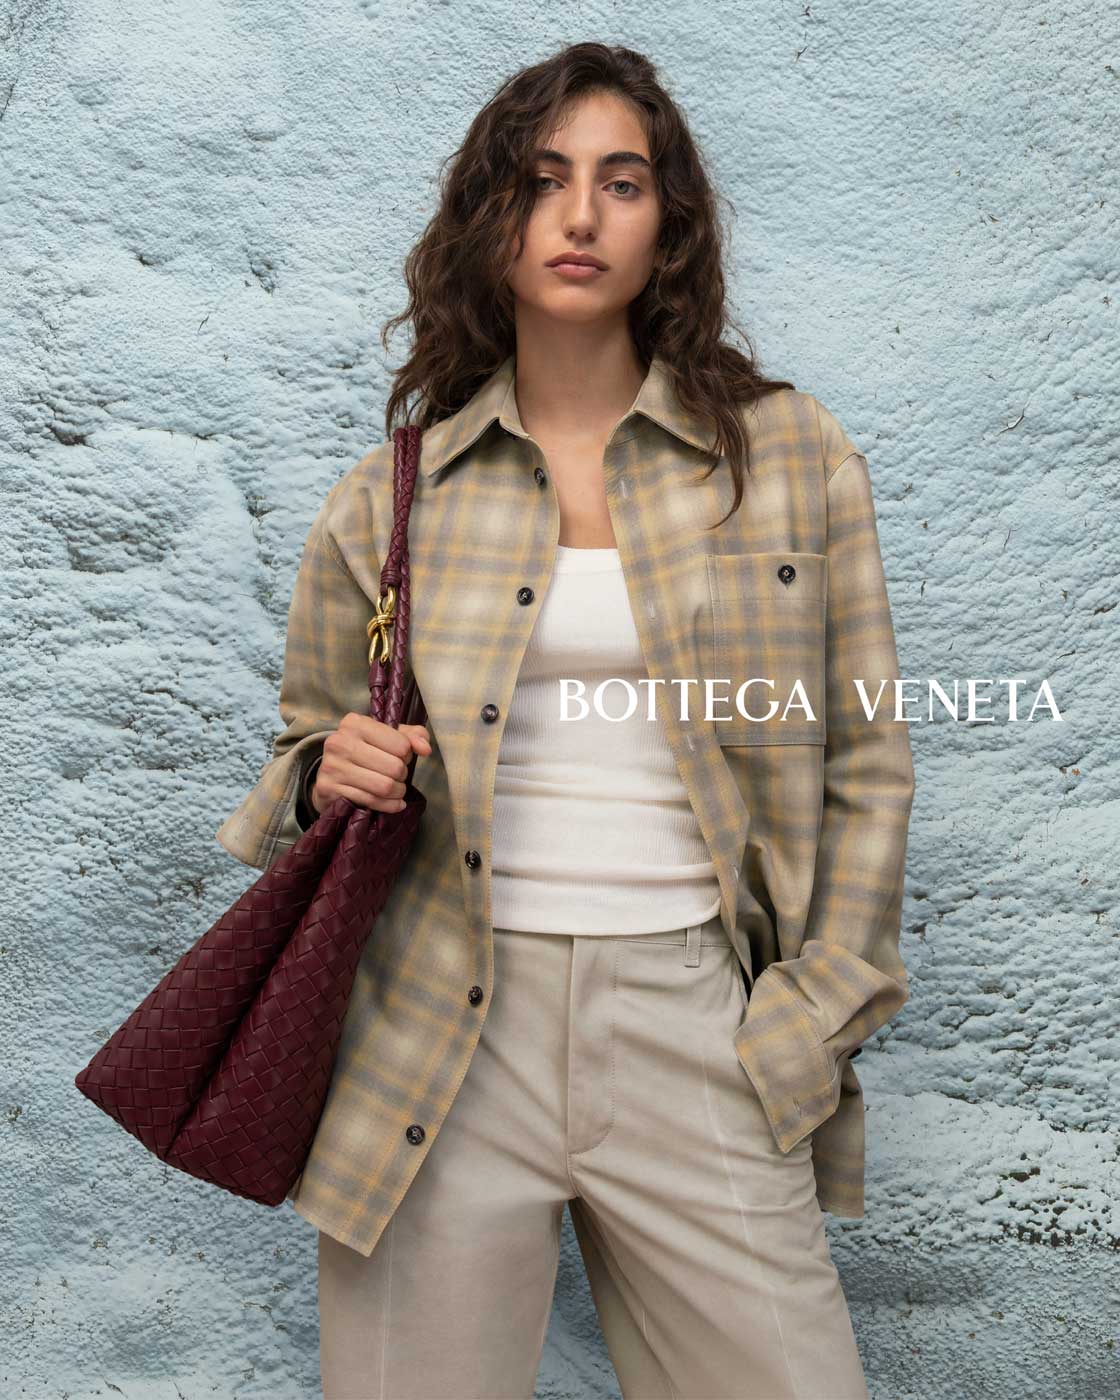 Bottega Veneta's Andiamo Handbag Is The Talk Of The Town - The